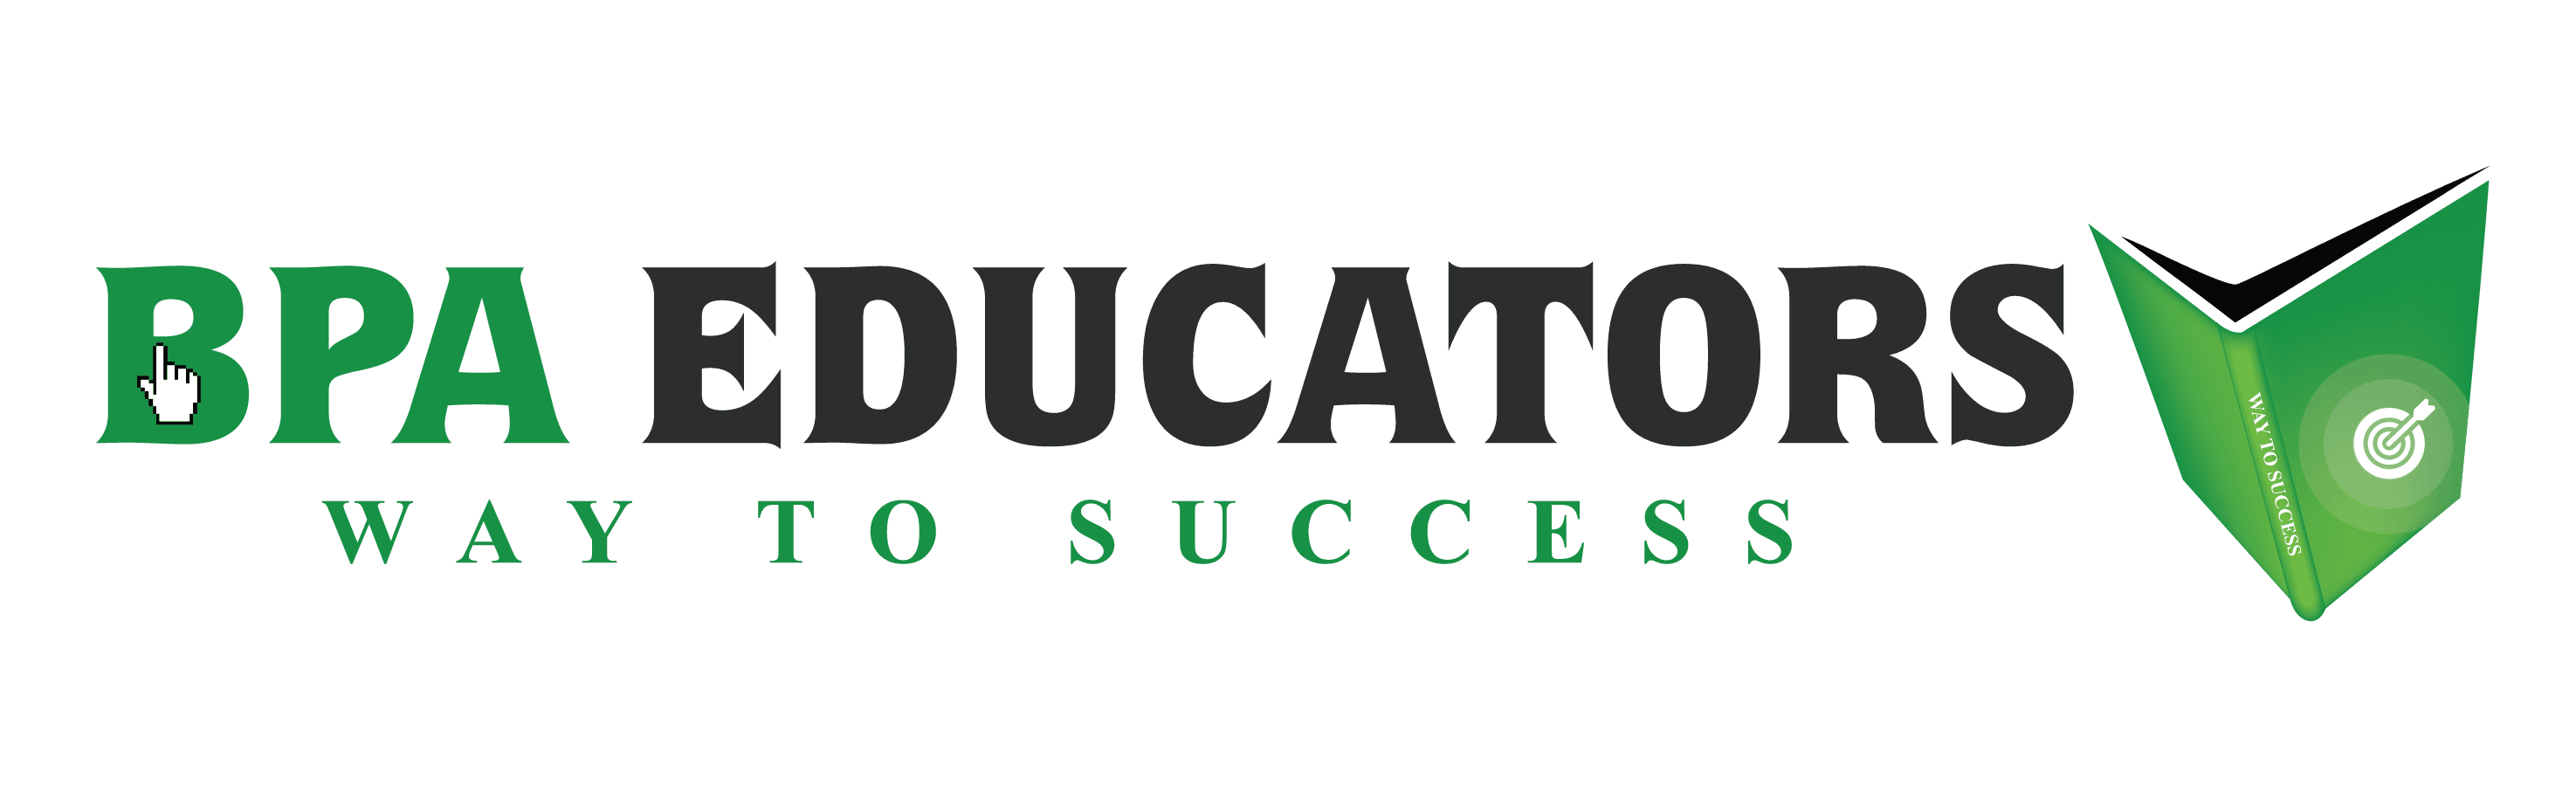 BPA Educator Logo